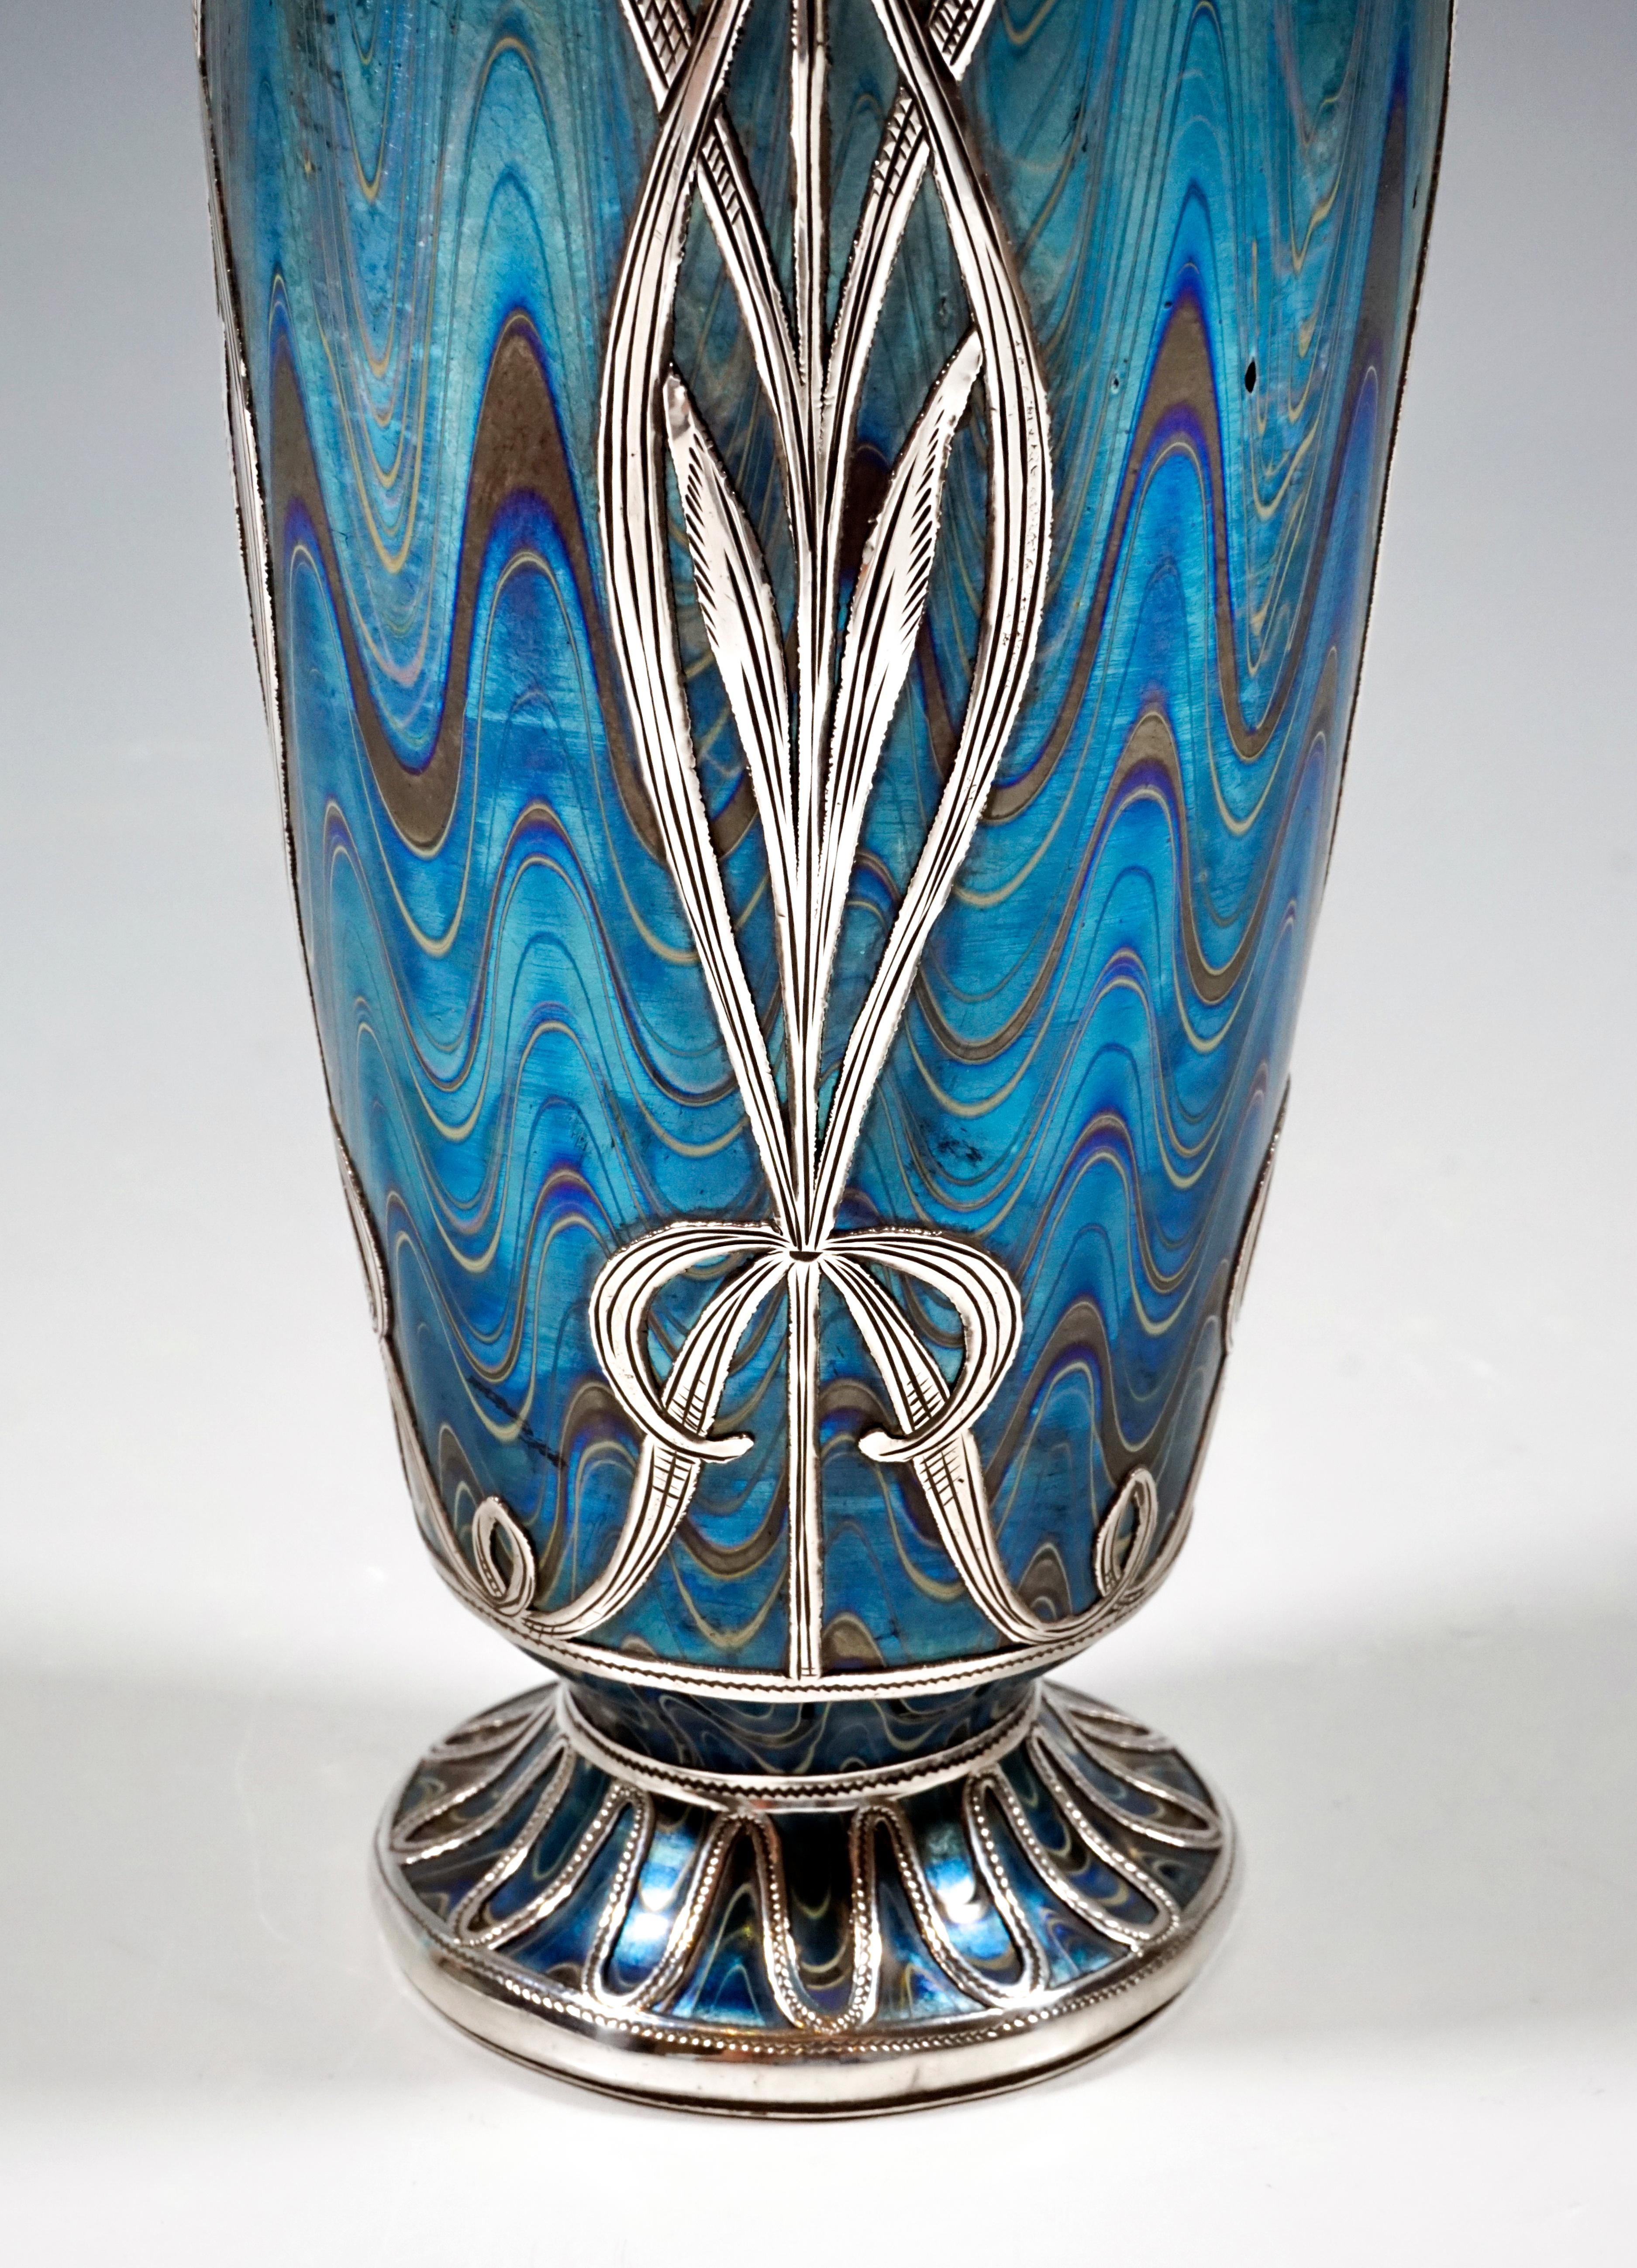 Glass Loetz Art Nouveau Vase Phenomenon Genre Ruby 6893 with Silver Overlay circa 1899